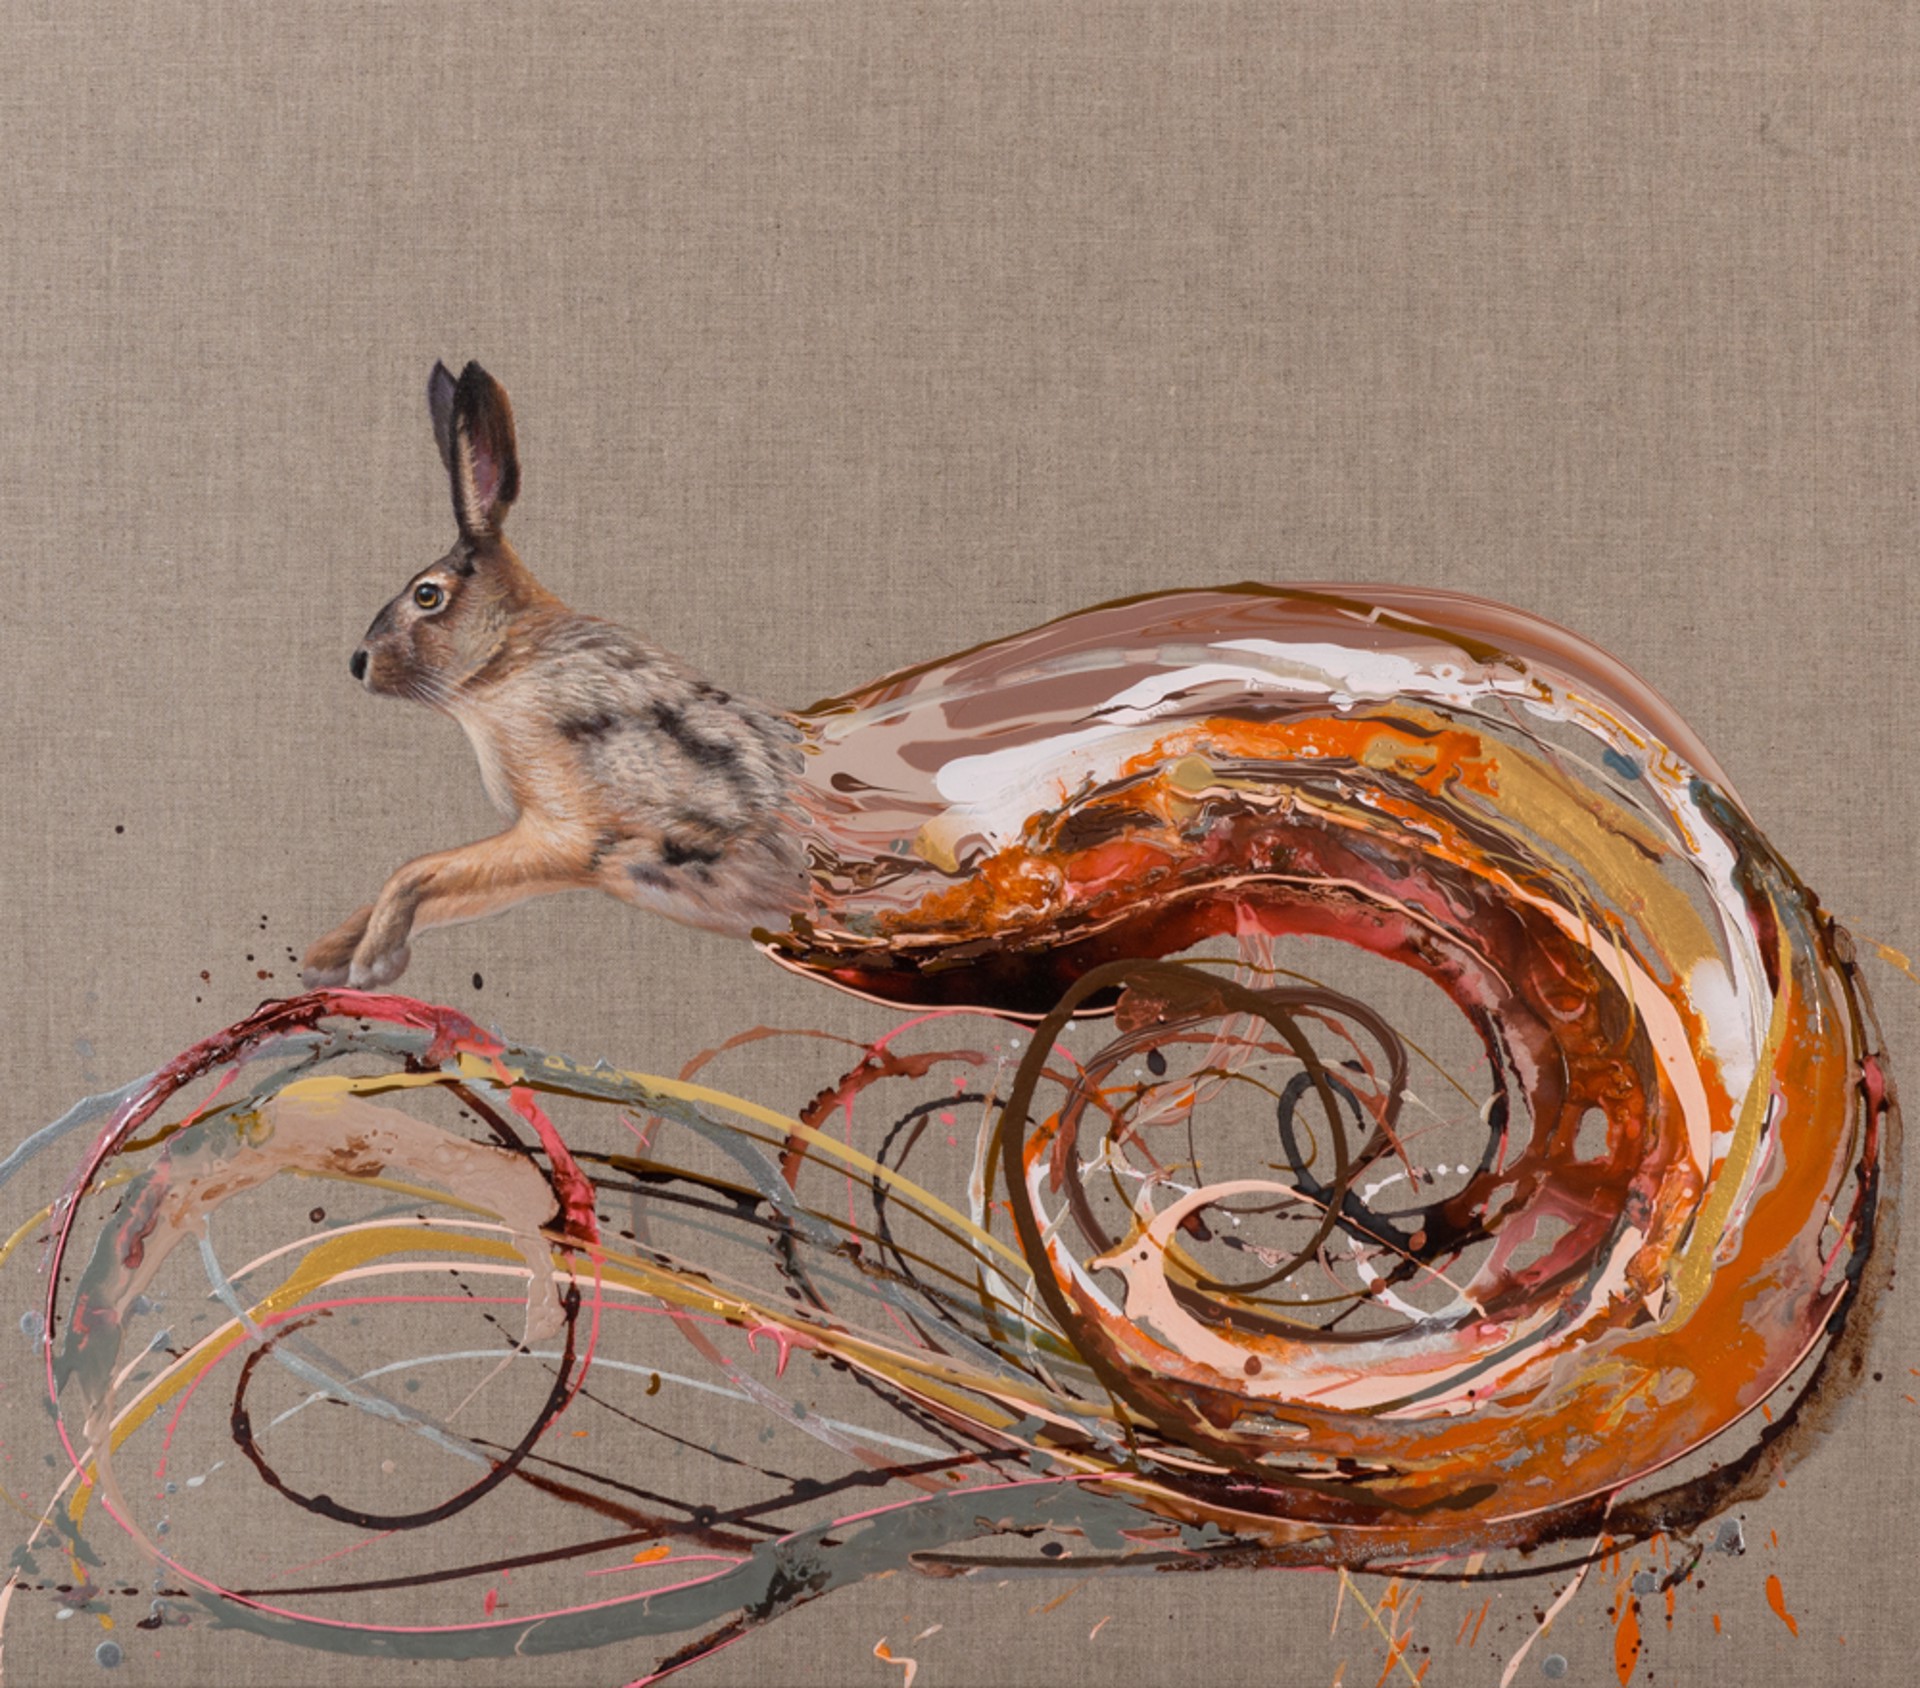 Wild Rabbit (Edition) by Gav Barbey